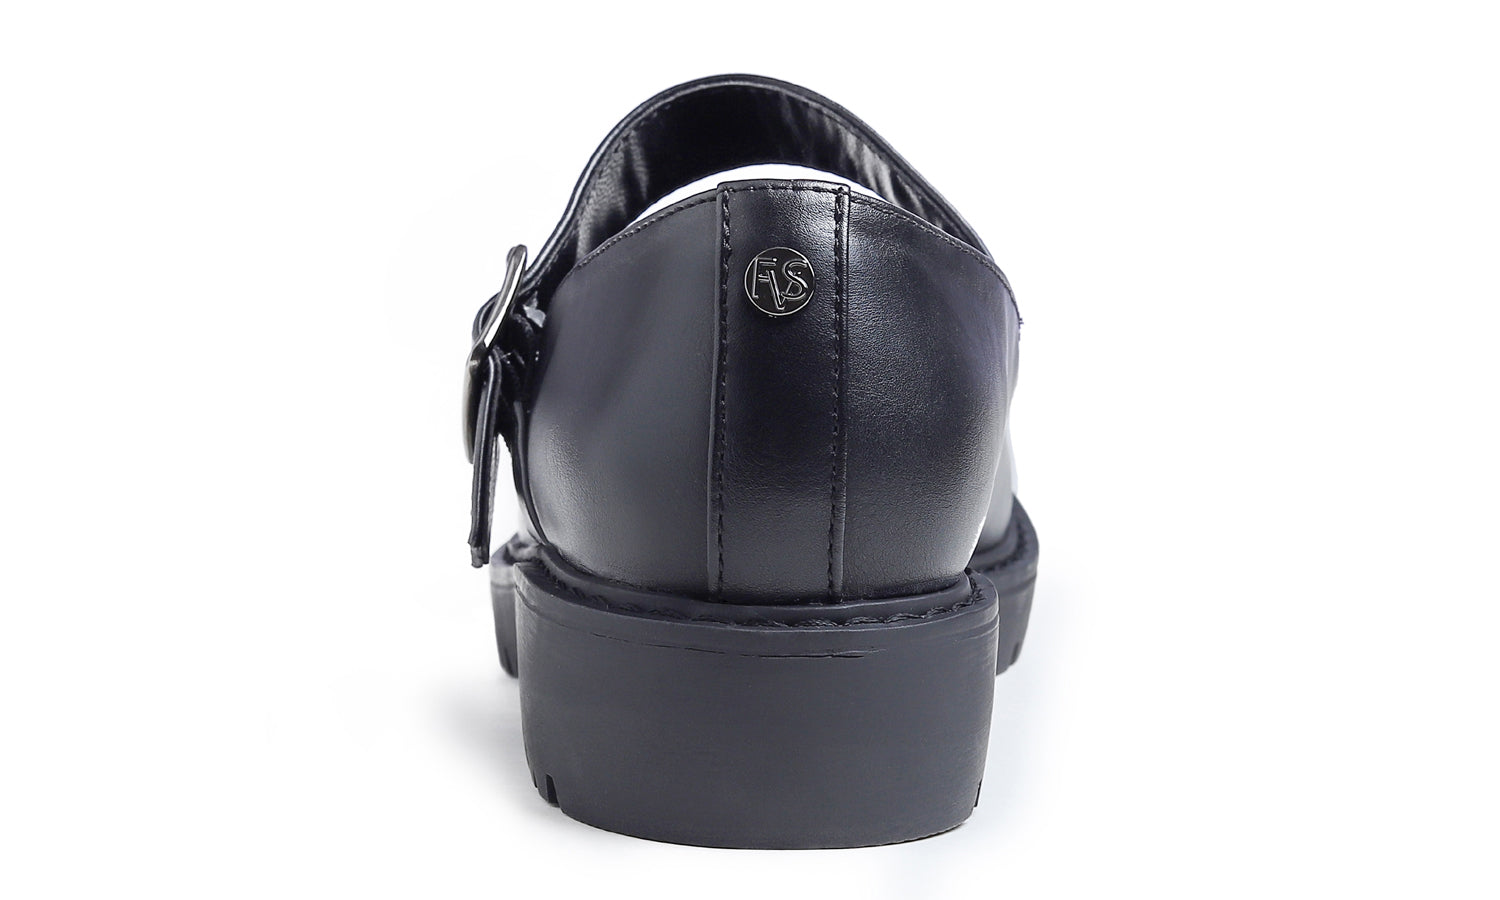 Feversole Women's Fashion Trim Deco Loafer Flats Black Vegan Leather Back Strap Buckle